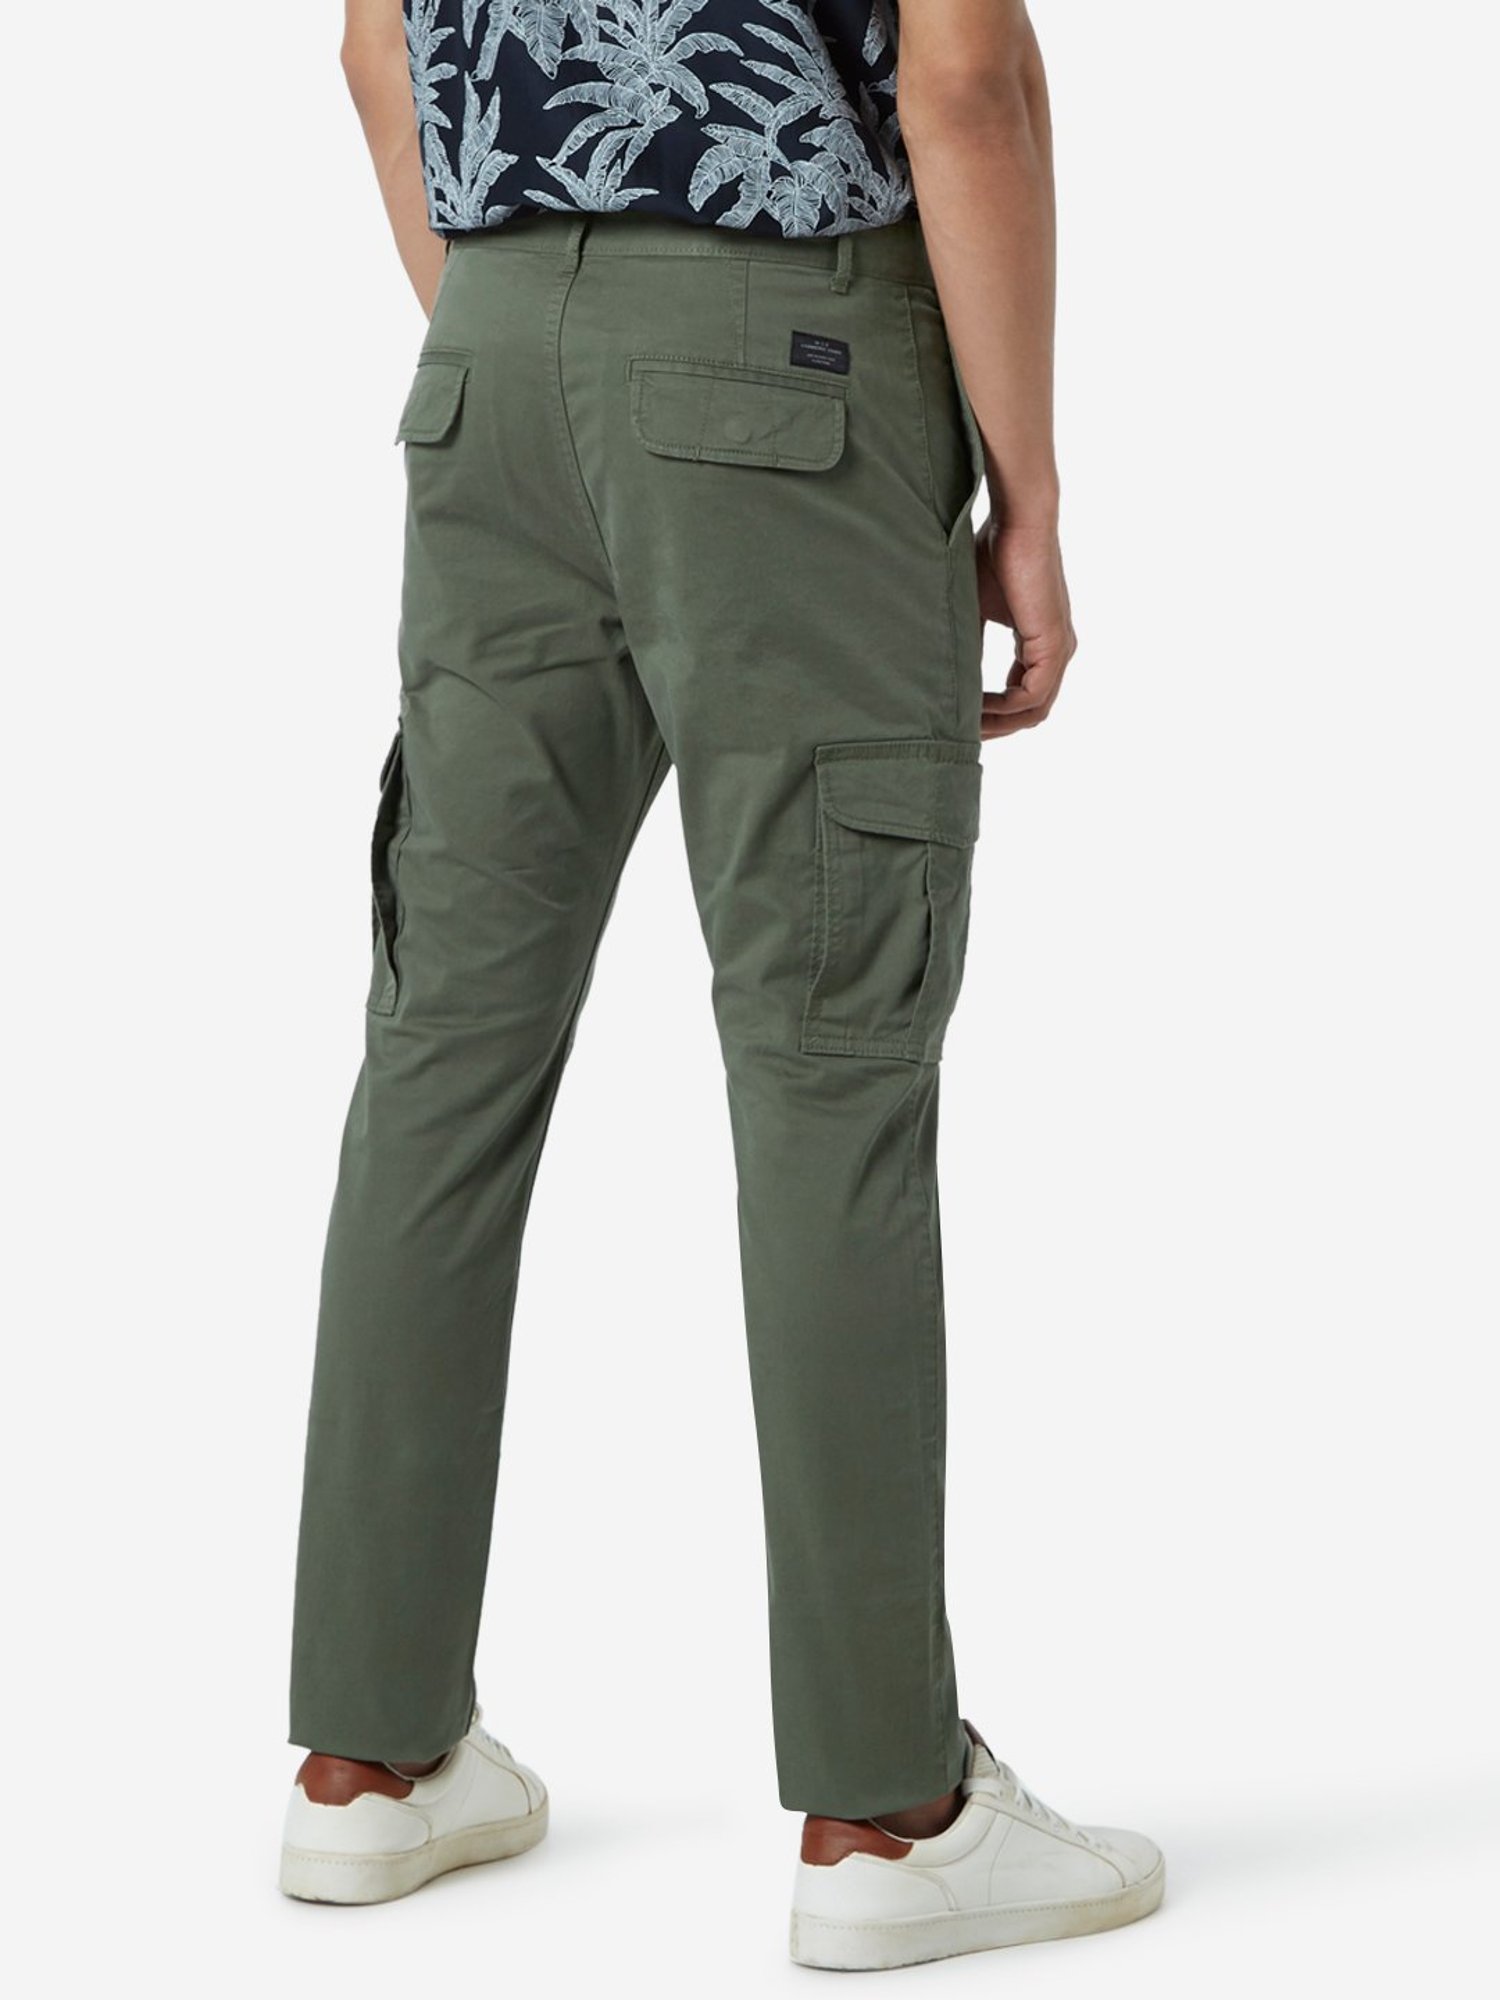 Buy SAPPER Slim Fit Mens Cargo Pants in India at best price f2fmartcom